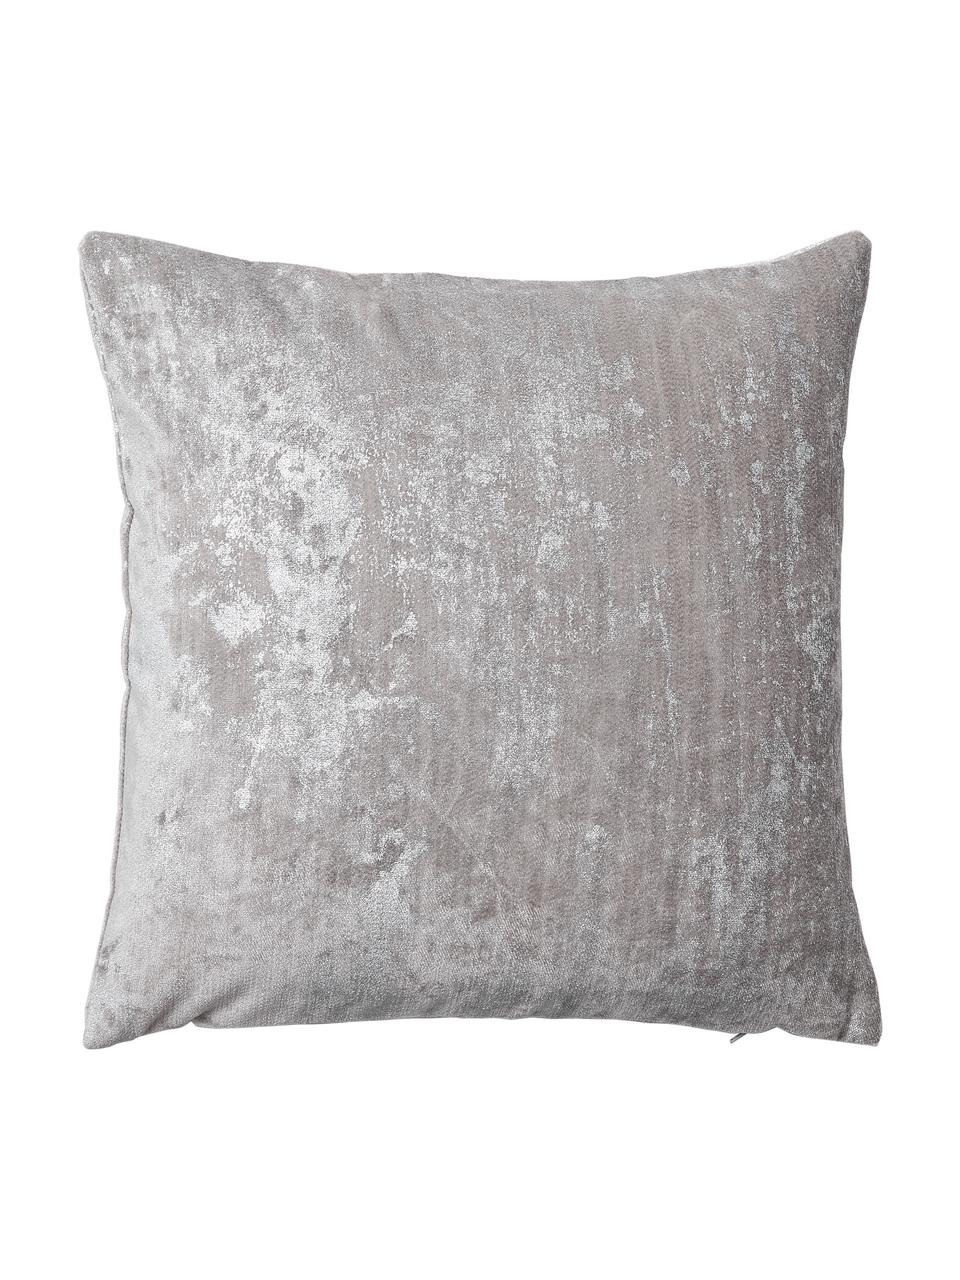 Samt-Kissenhülle Shiny mit schimmerndem Vintage Muster, 100 % Polyestersamt, Grau, Silberfarben, B 40 x L 40 cm